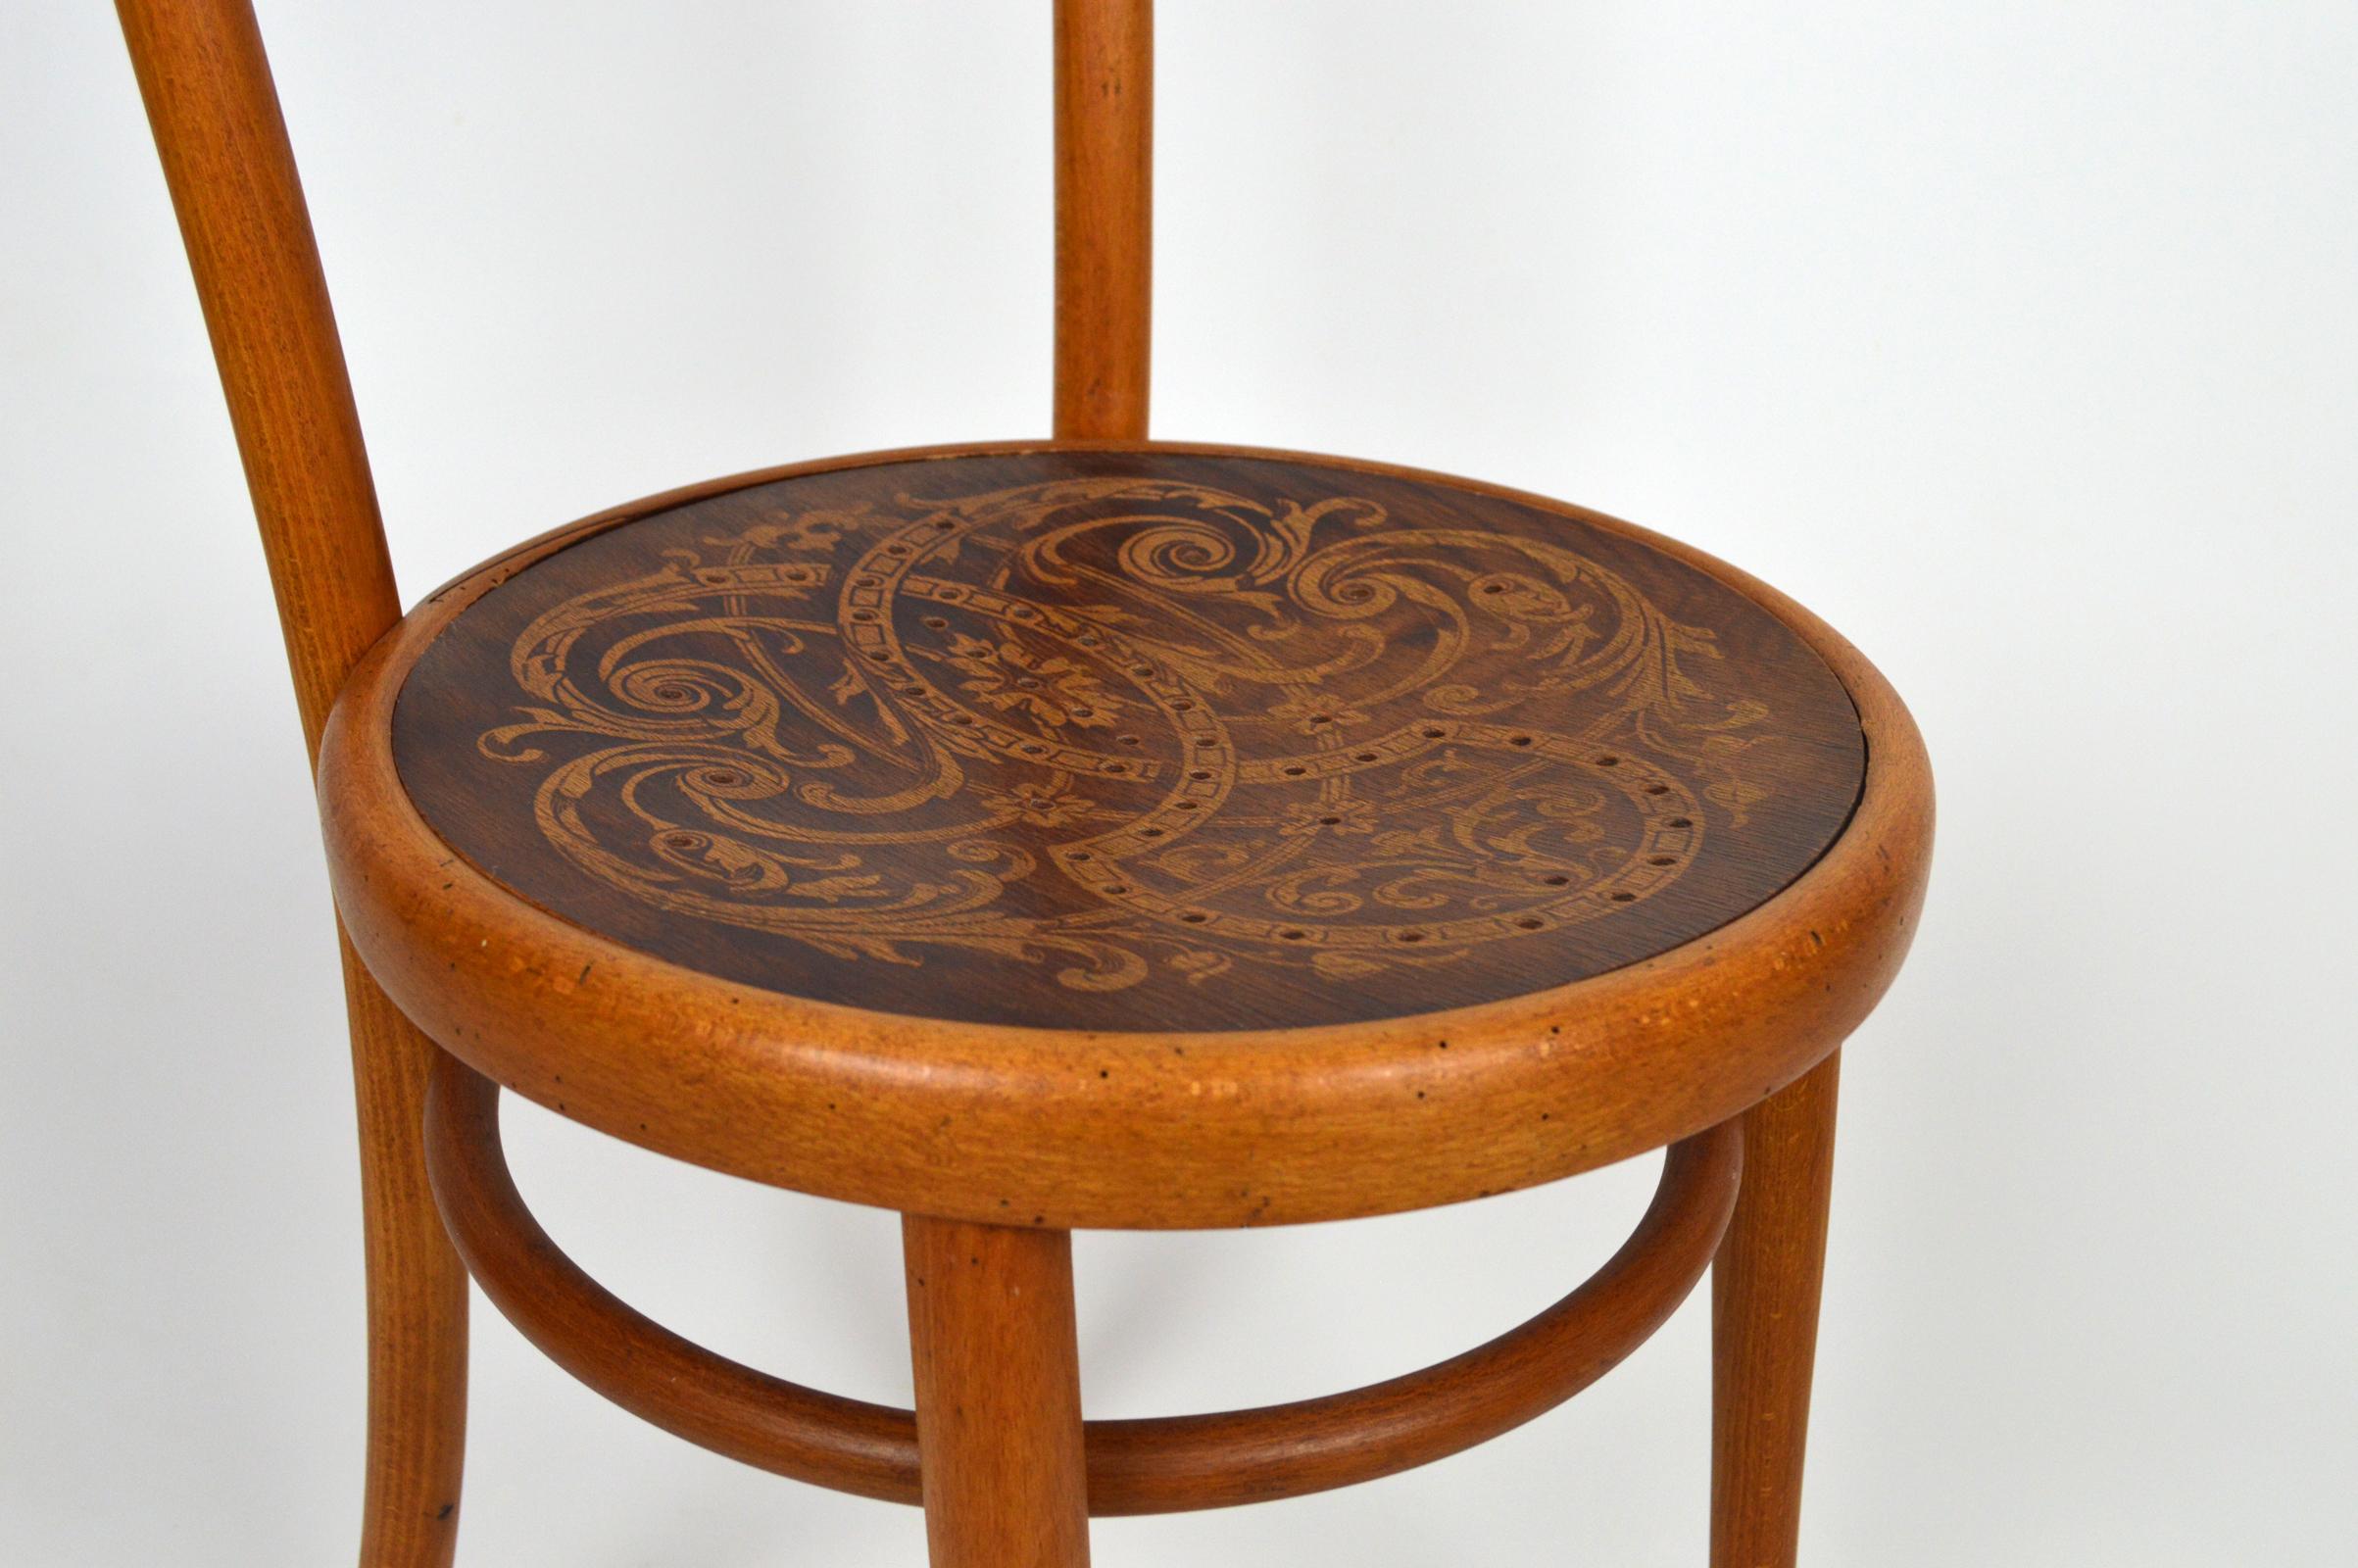 Wood Austrian Art Nouveau Bentwood Chair with Patterned Seat, J. & J. Kohn, 1900s For Sale